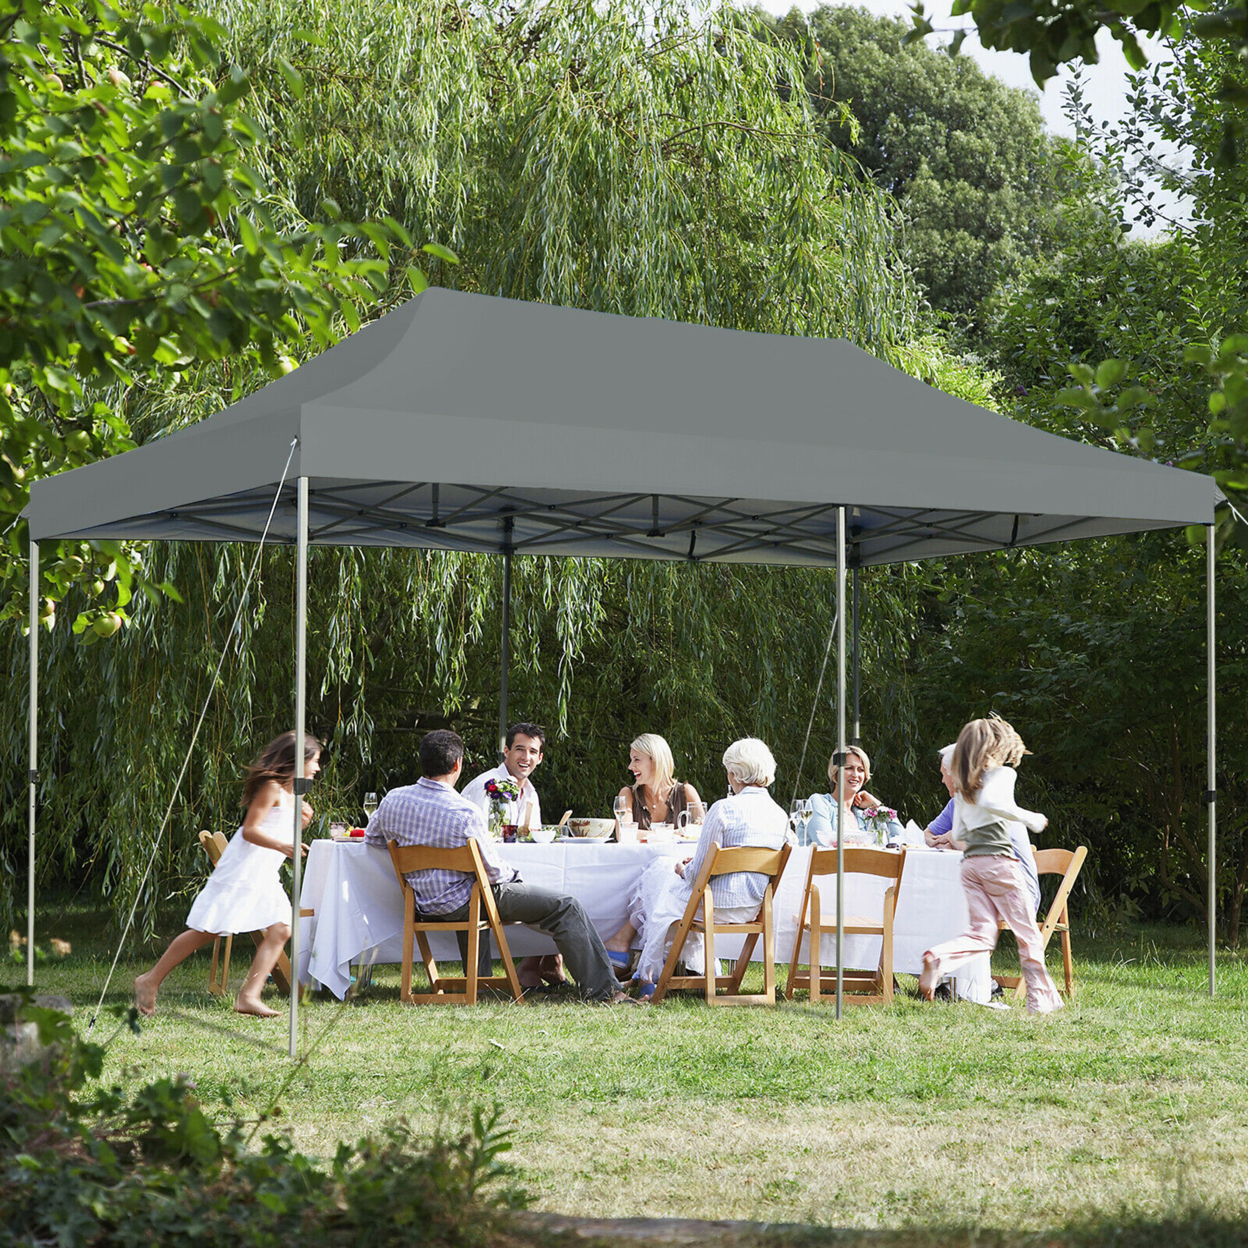 10'x20' Pop Up Canopy Tent Folding Heavy Duty Sun Shelter Adjustable W/Bag - Blue